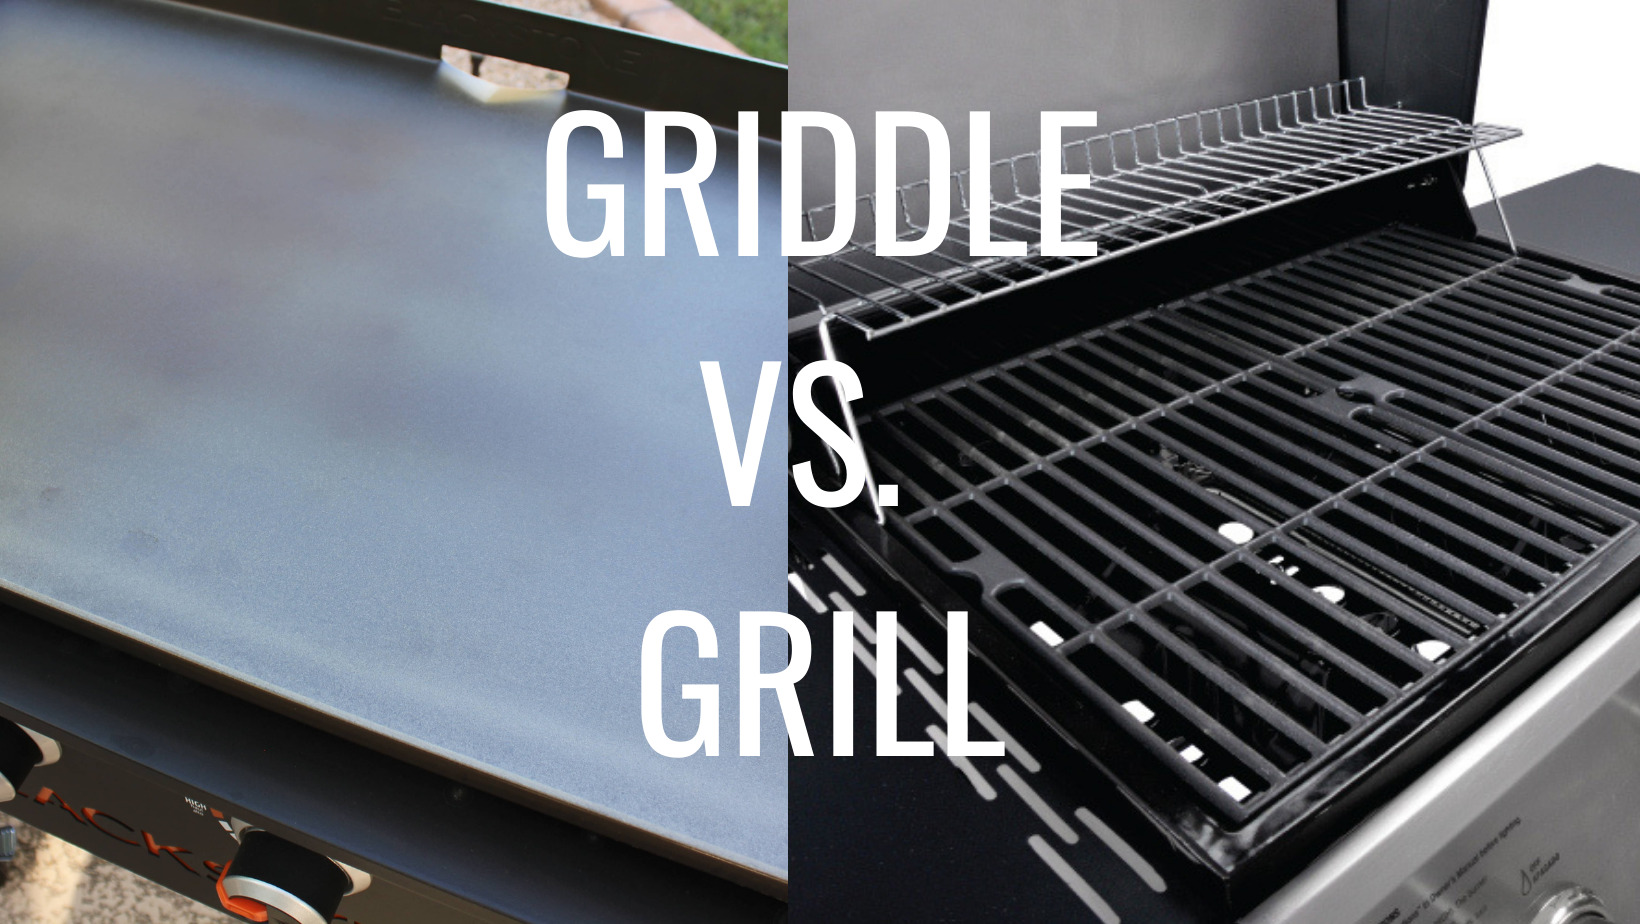 Griddle vs. Grill